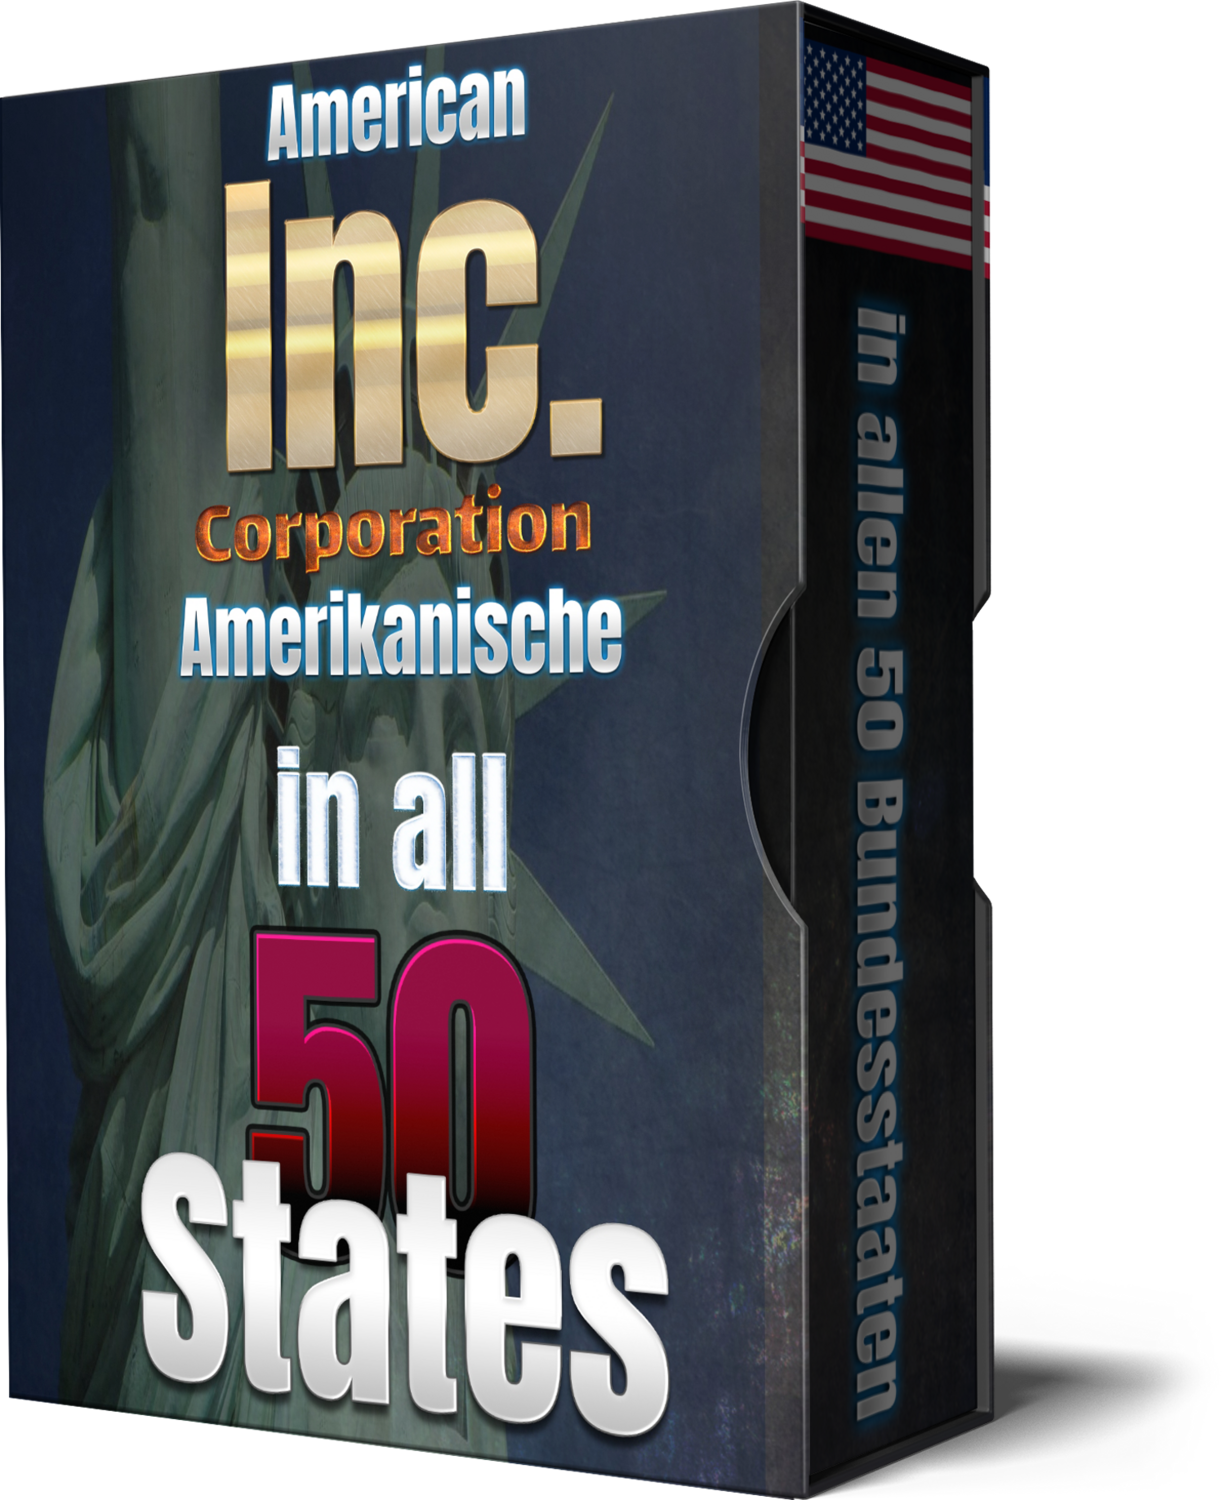 Amerikanische Inc. Corporation (verfügbar in allen 50 Bundesstaaten)